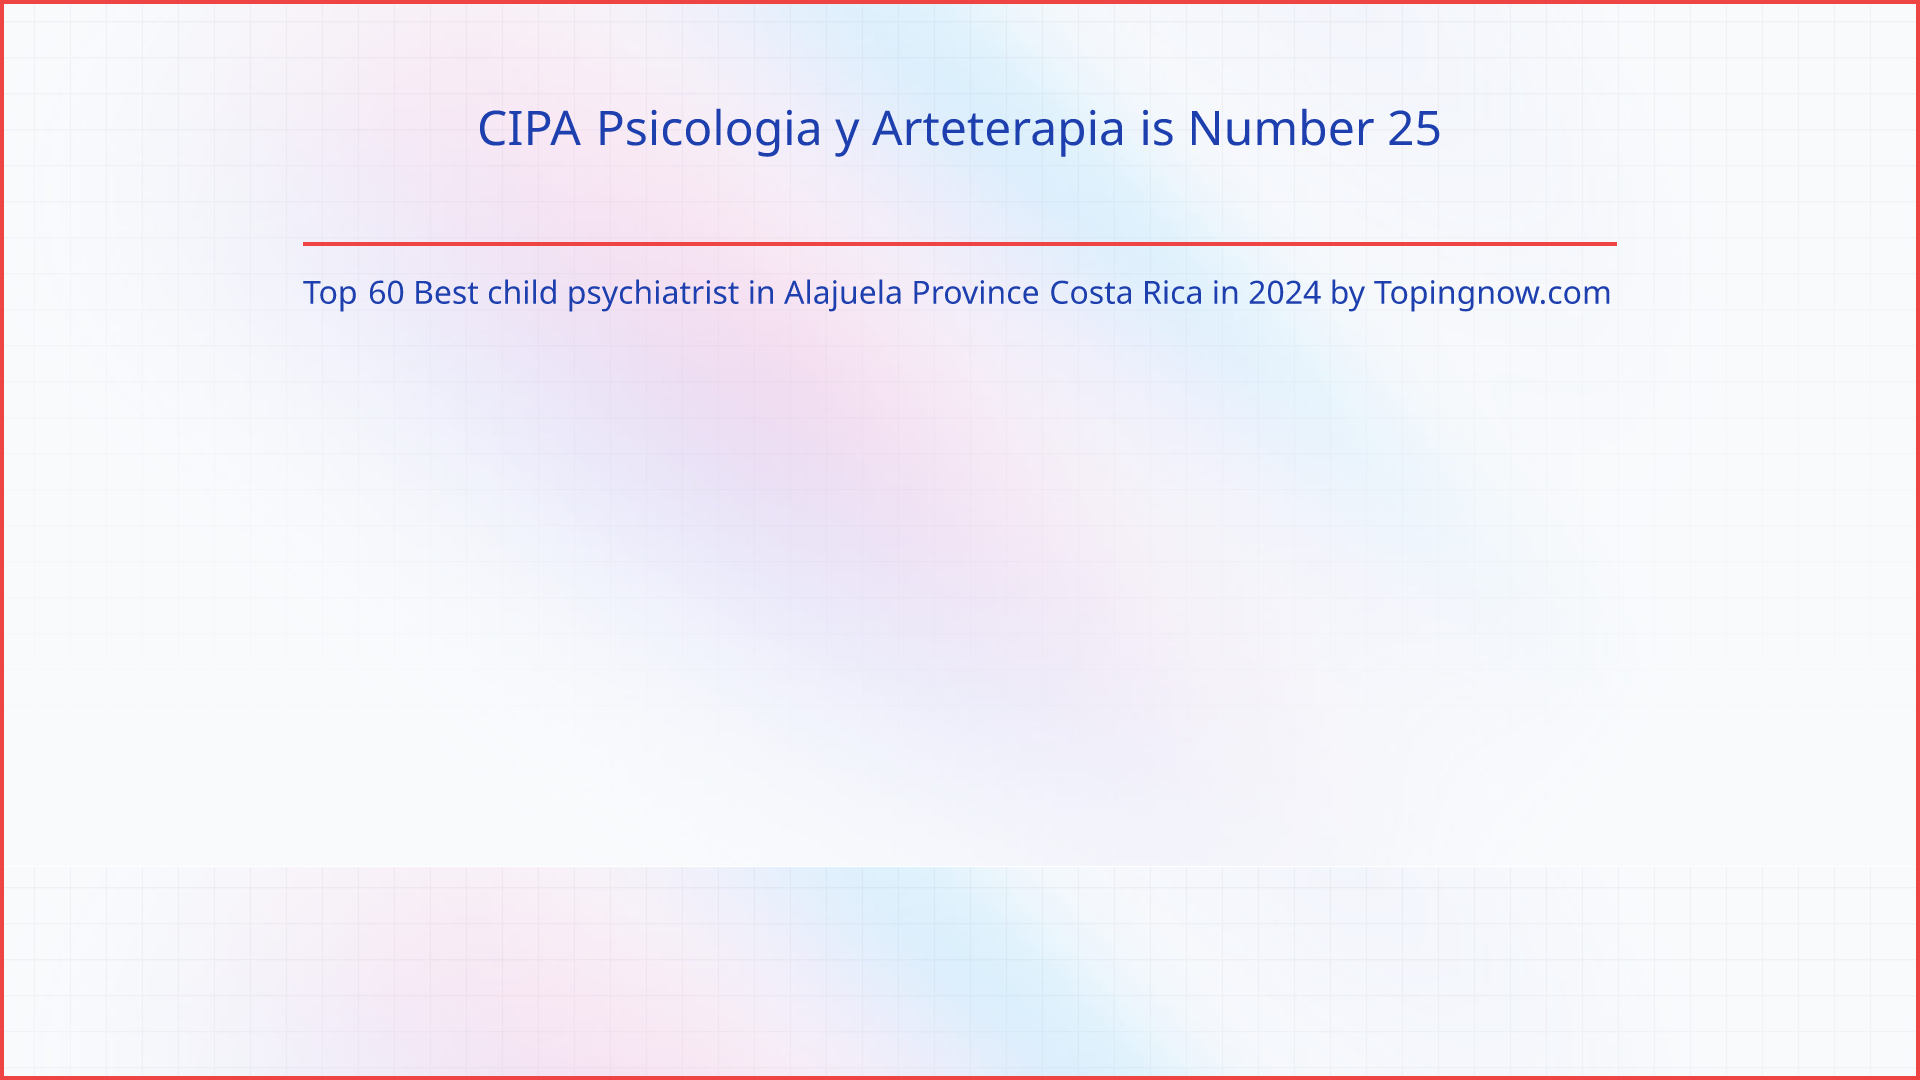 CIPA Psicologia y Arteterapia: Top 60 Best child psychiatrist in Alajuela Province Costa Rica in 2024